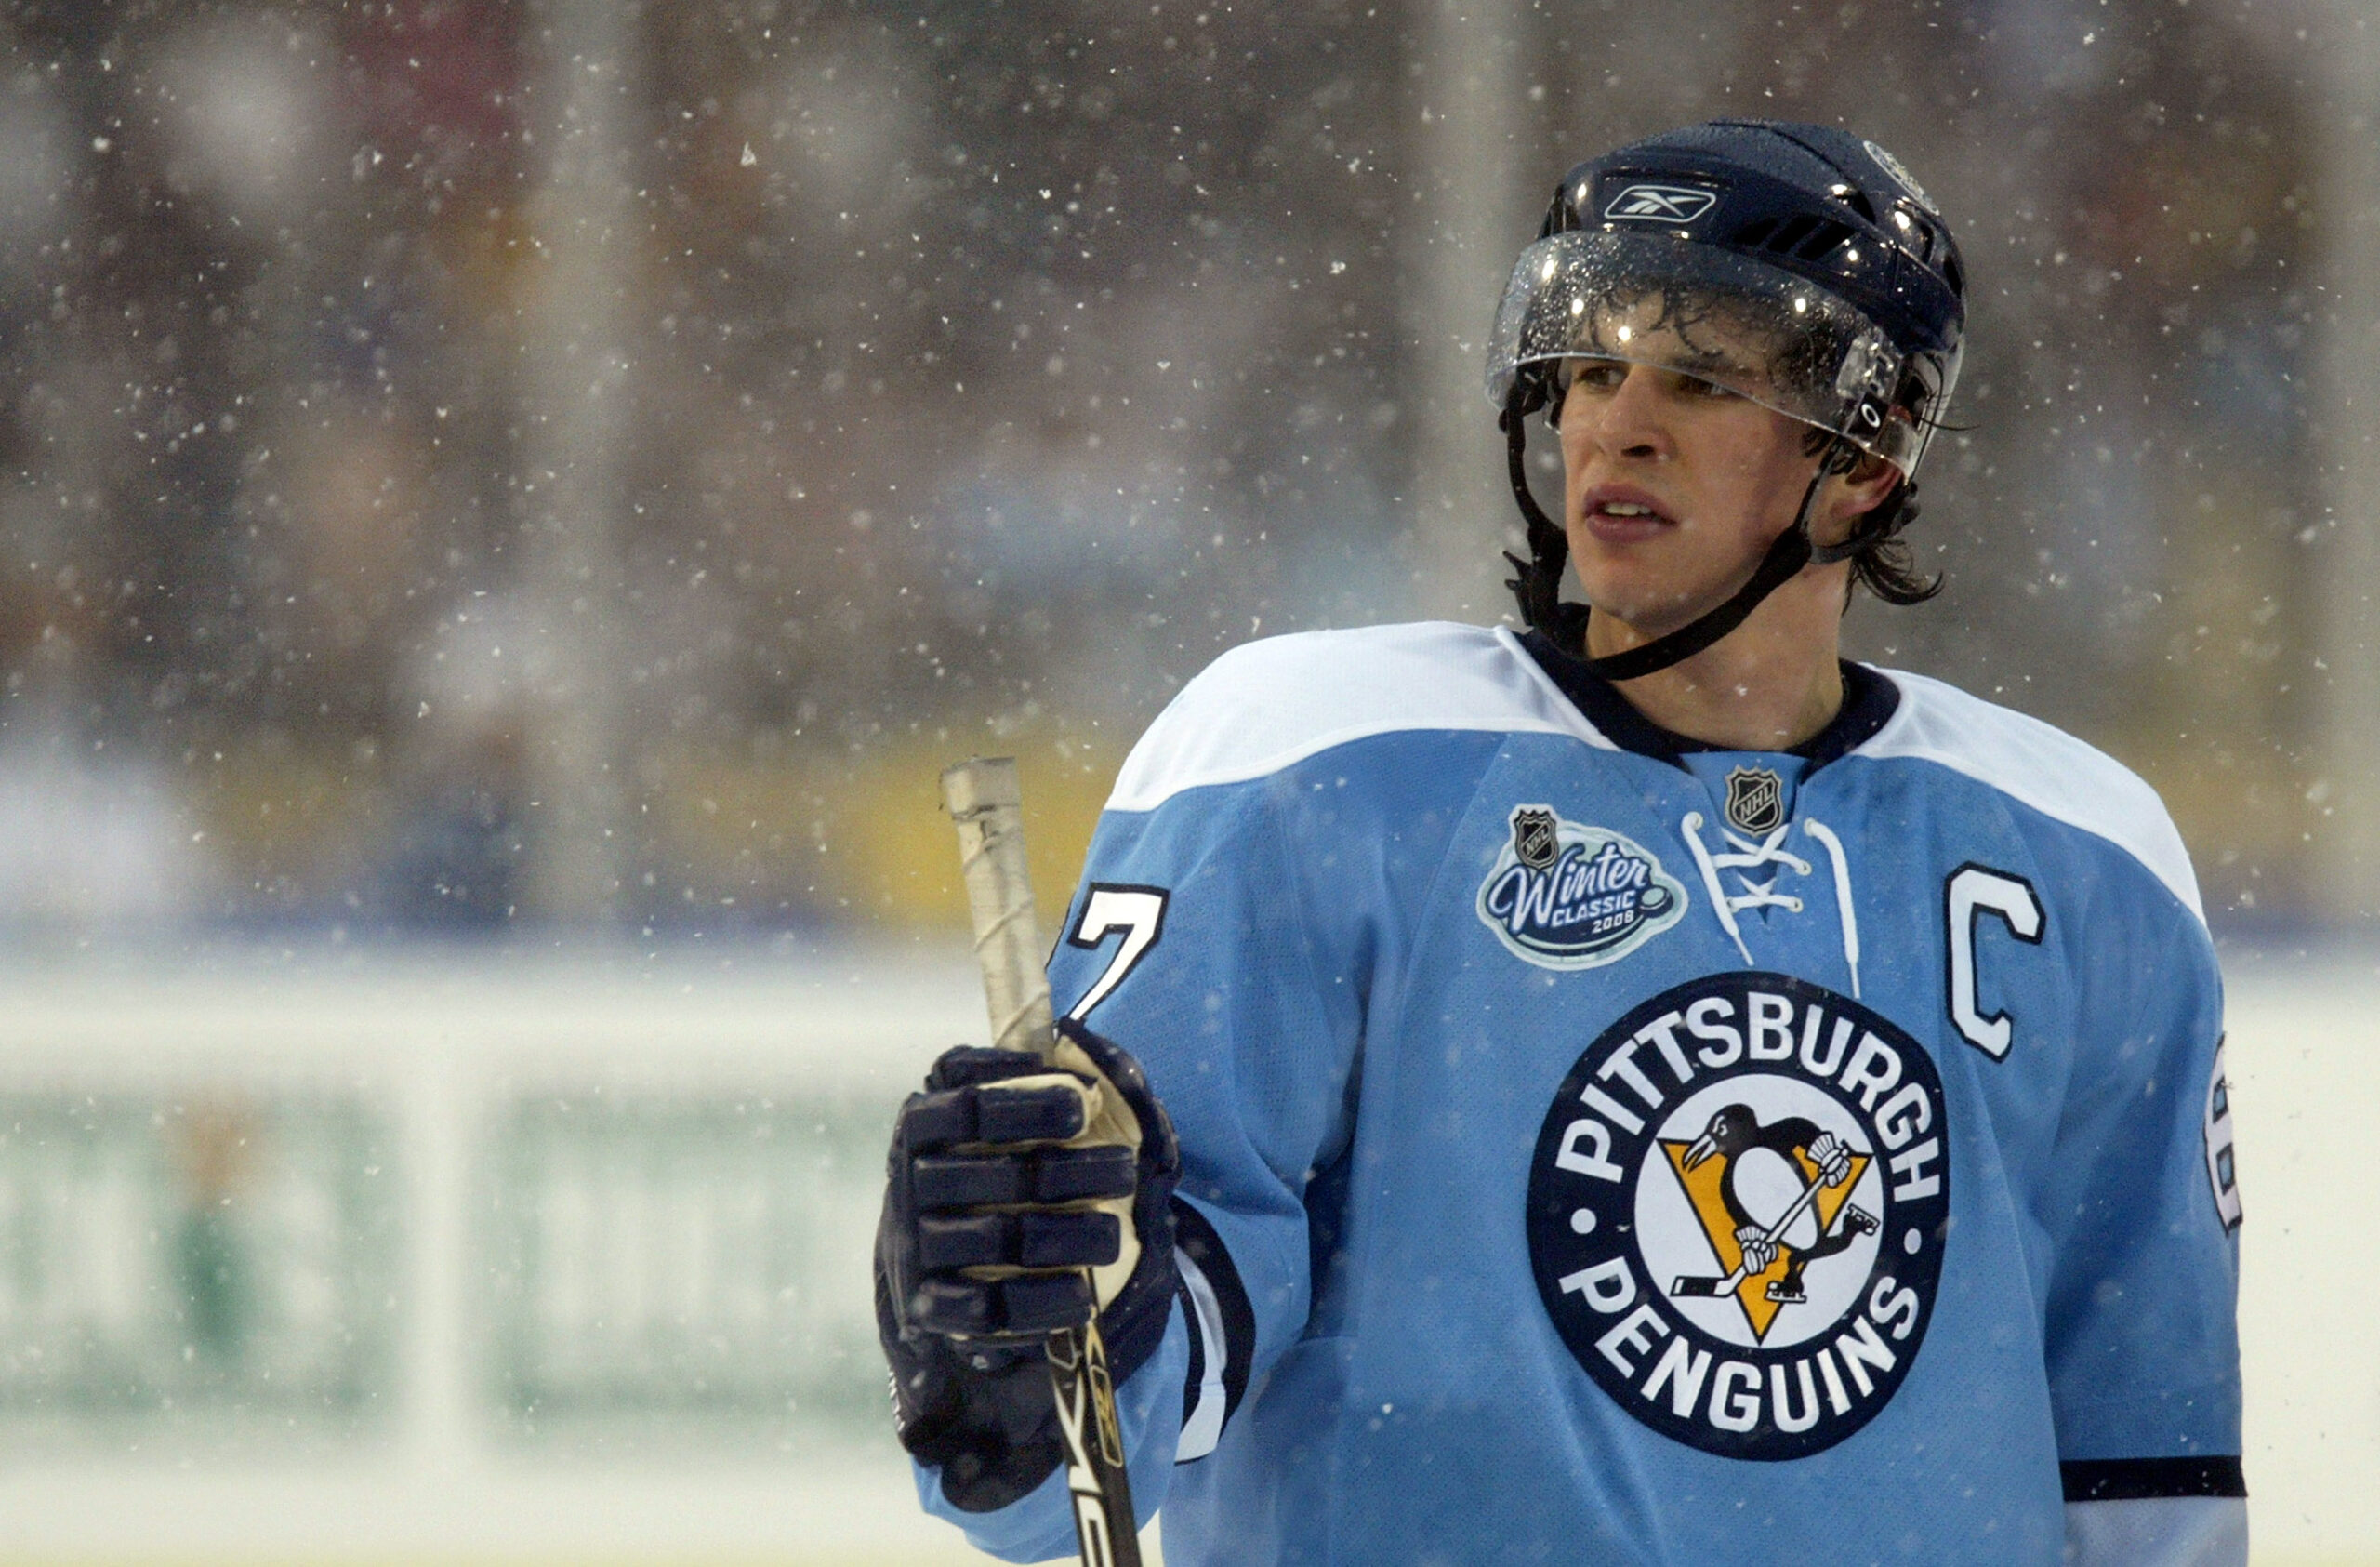 Sidney Crosby Pittsburgh Penguins Penguins Jersey light blue